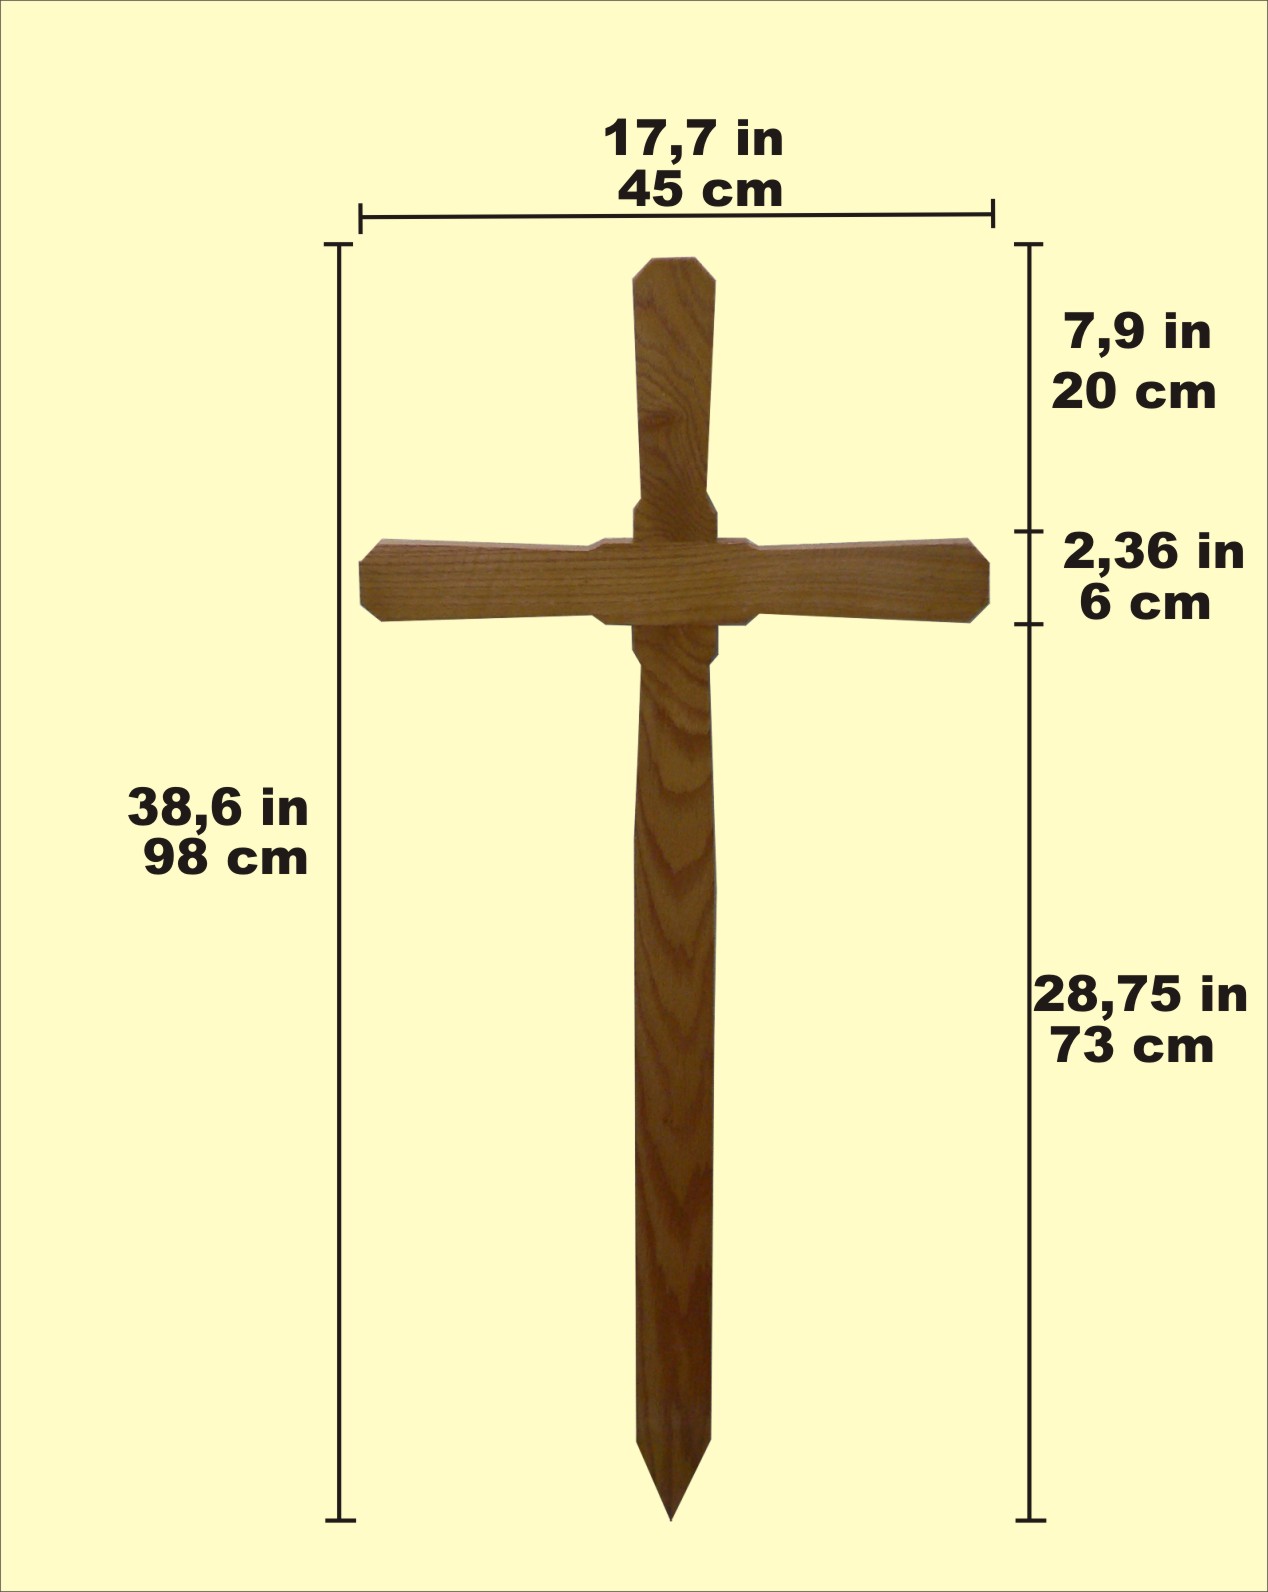 Wooden Memorial Crosses